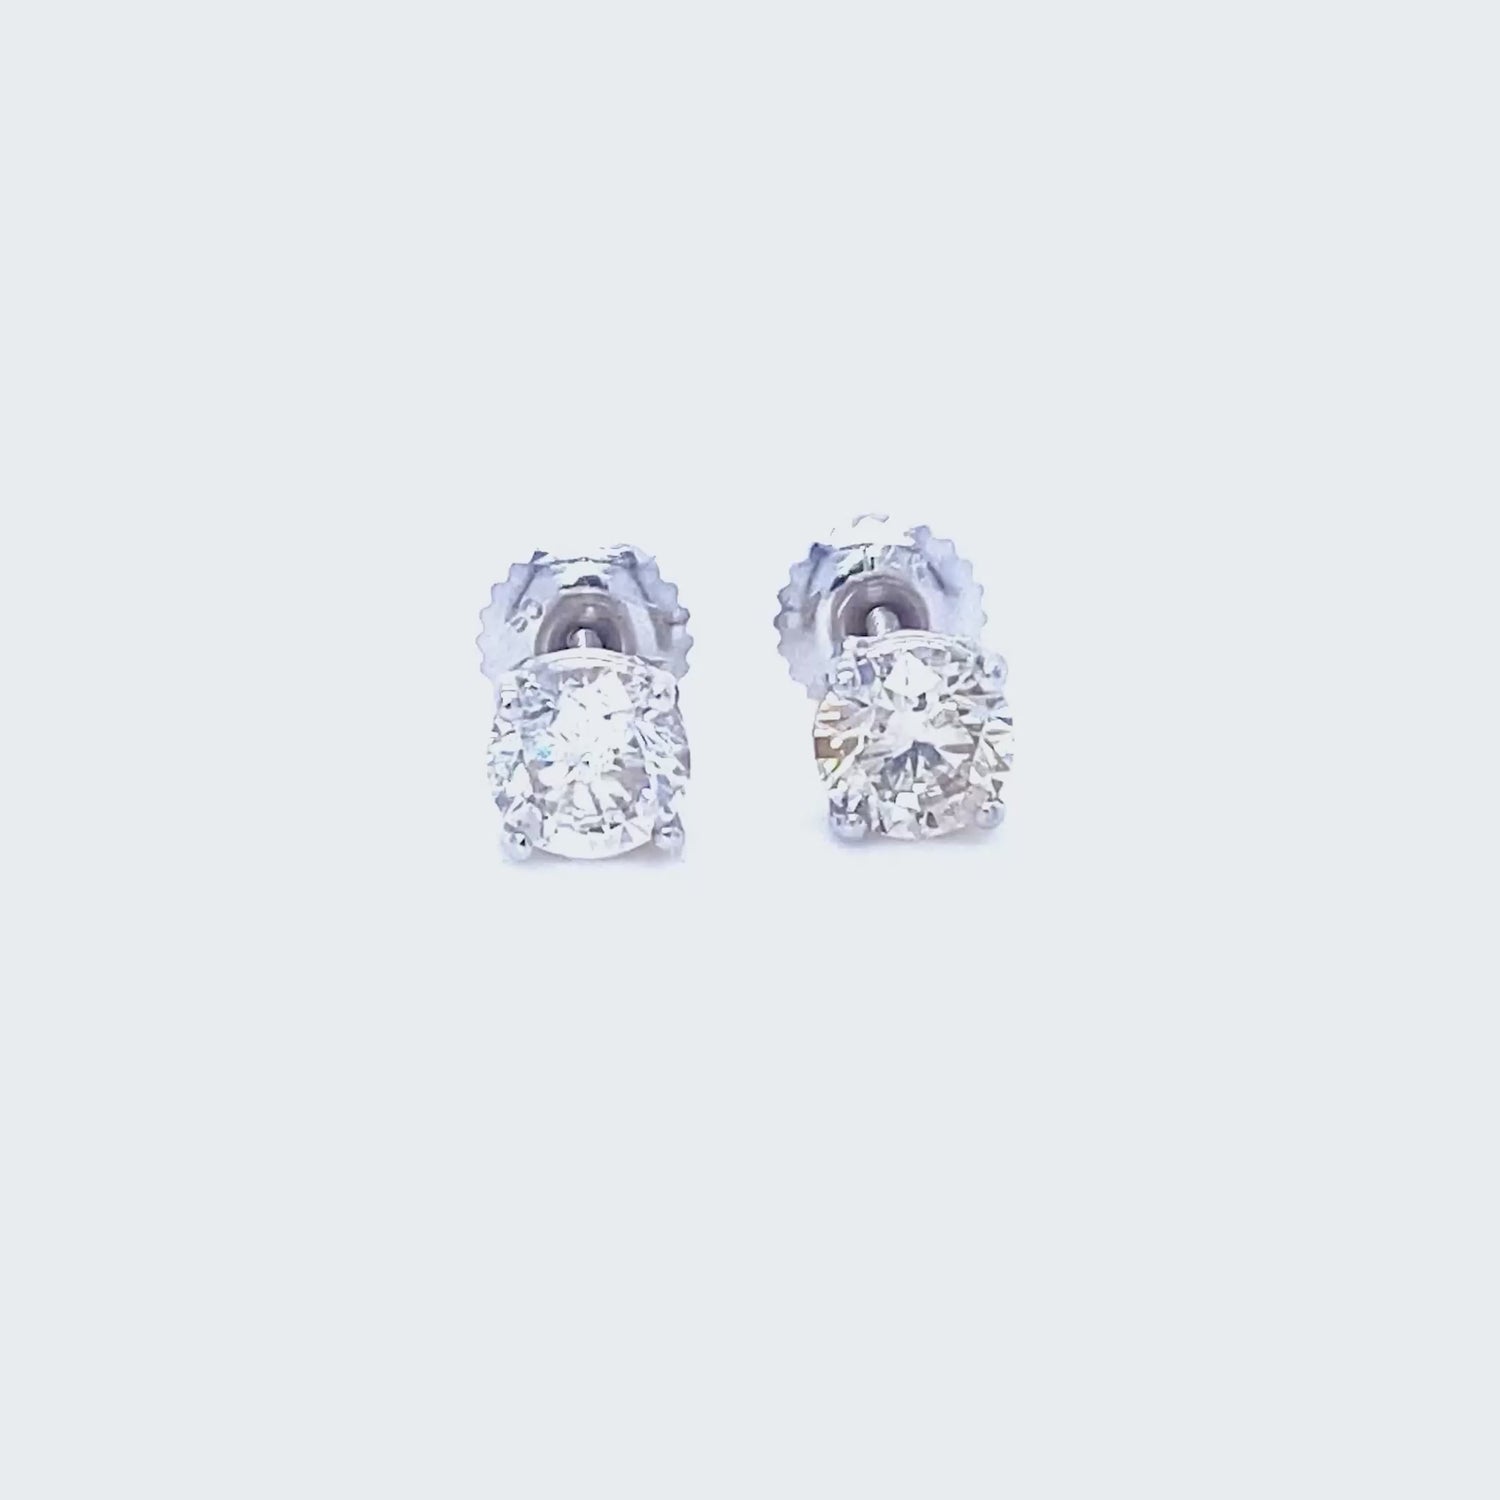 Certified 1.30CT Round Cut Diamond Stud Earrings in 14KT White Gold